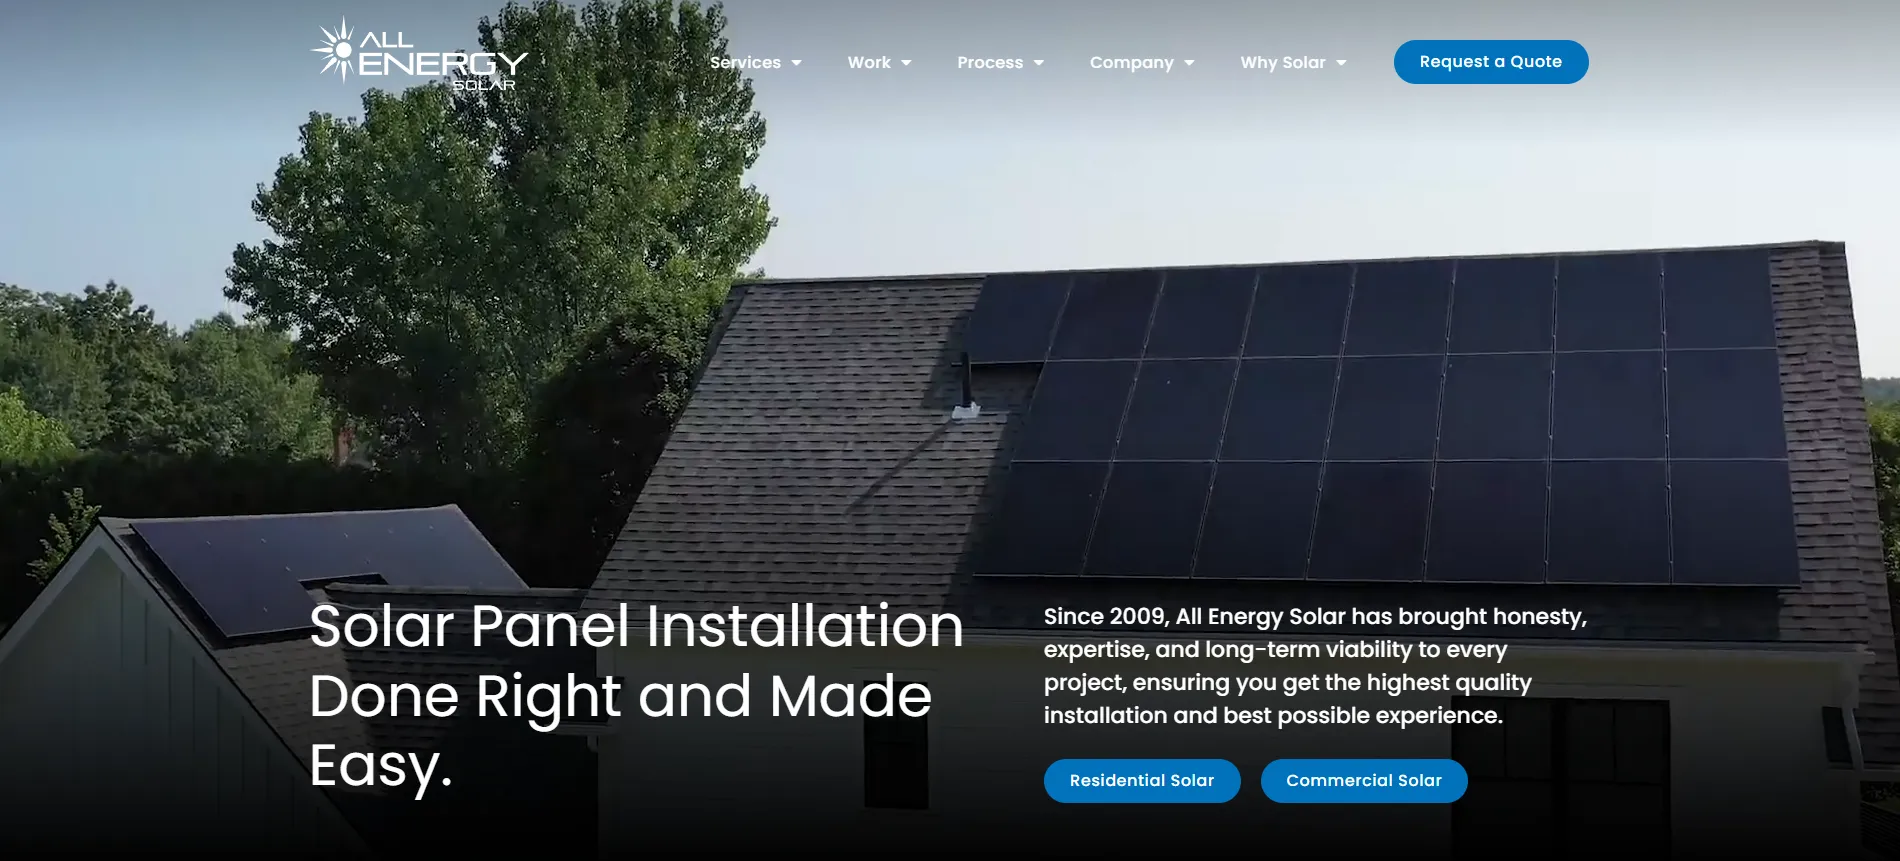 All Energy Solar homepage